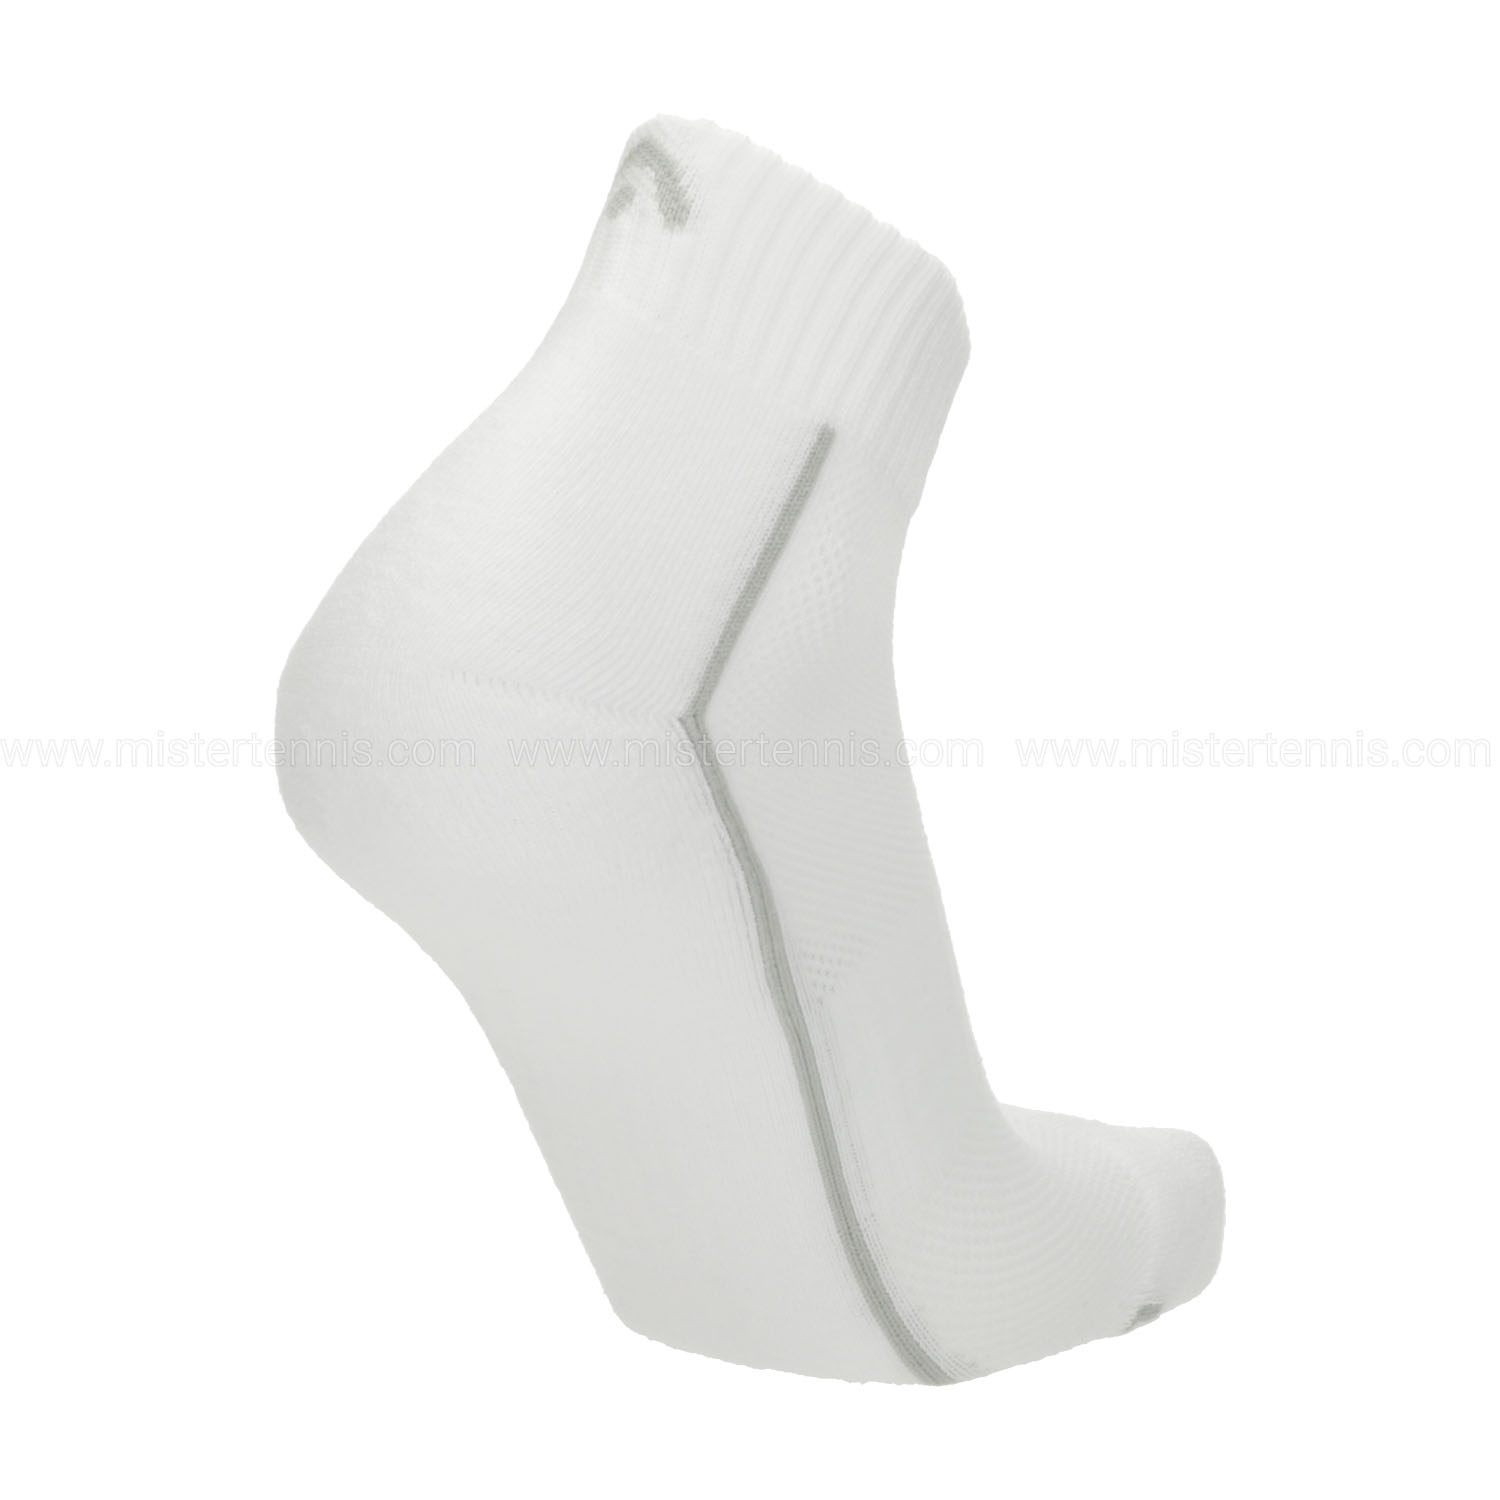 Head Stripe x 2 Socks - White